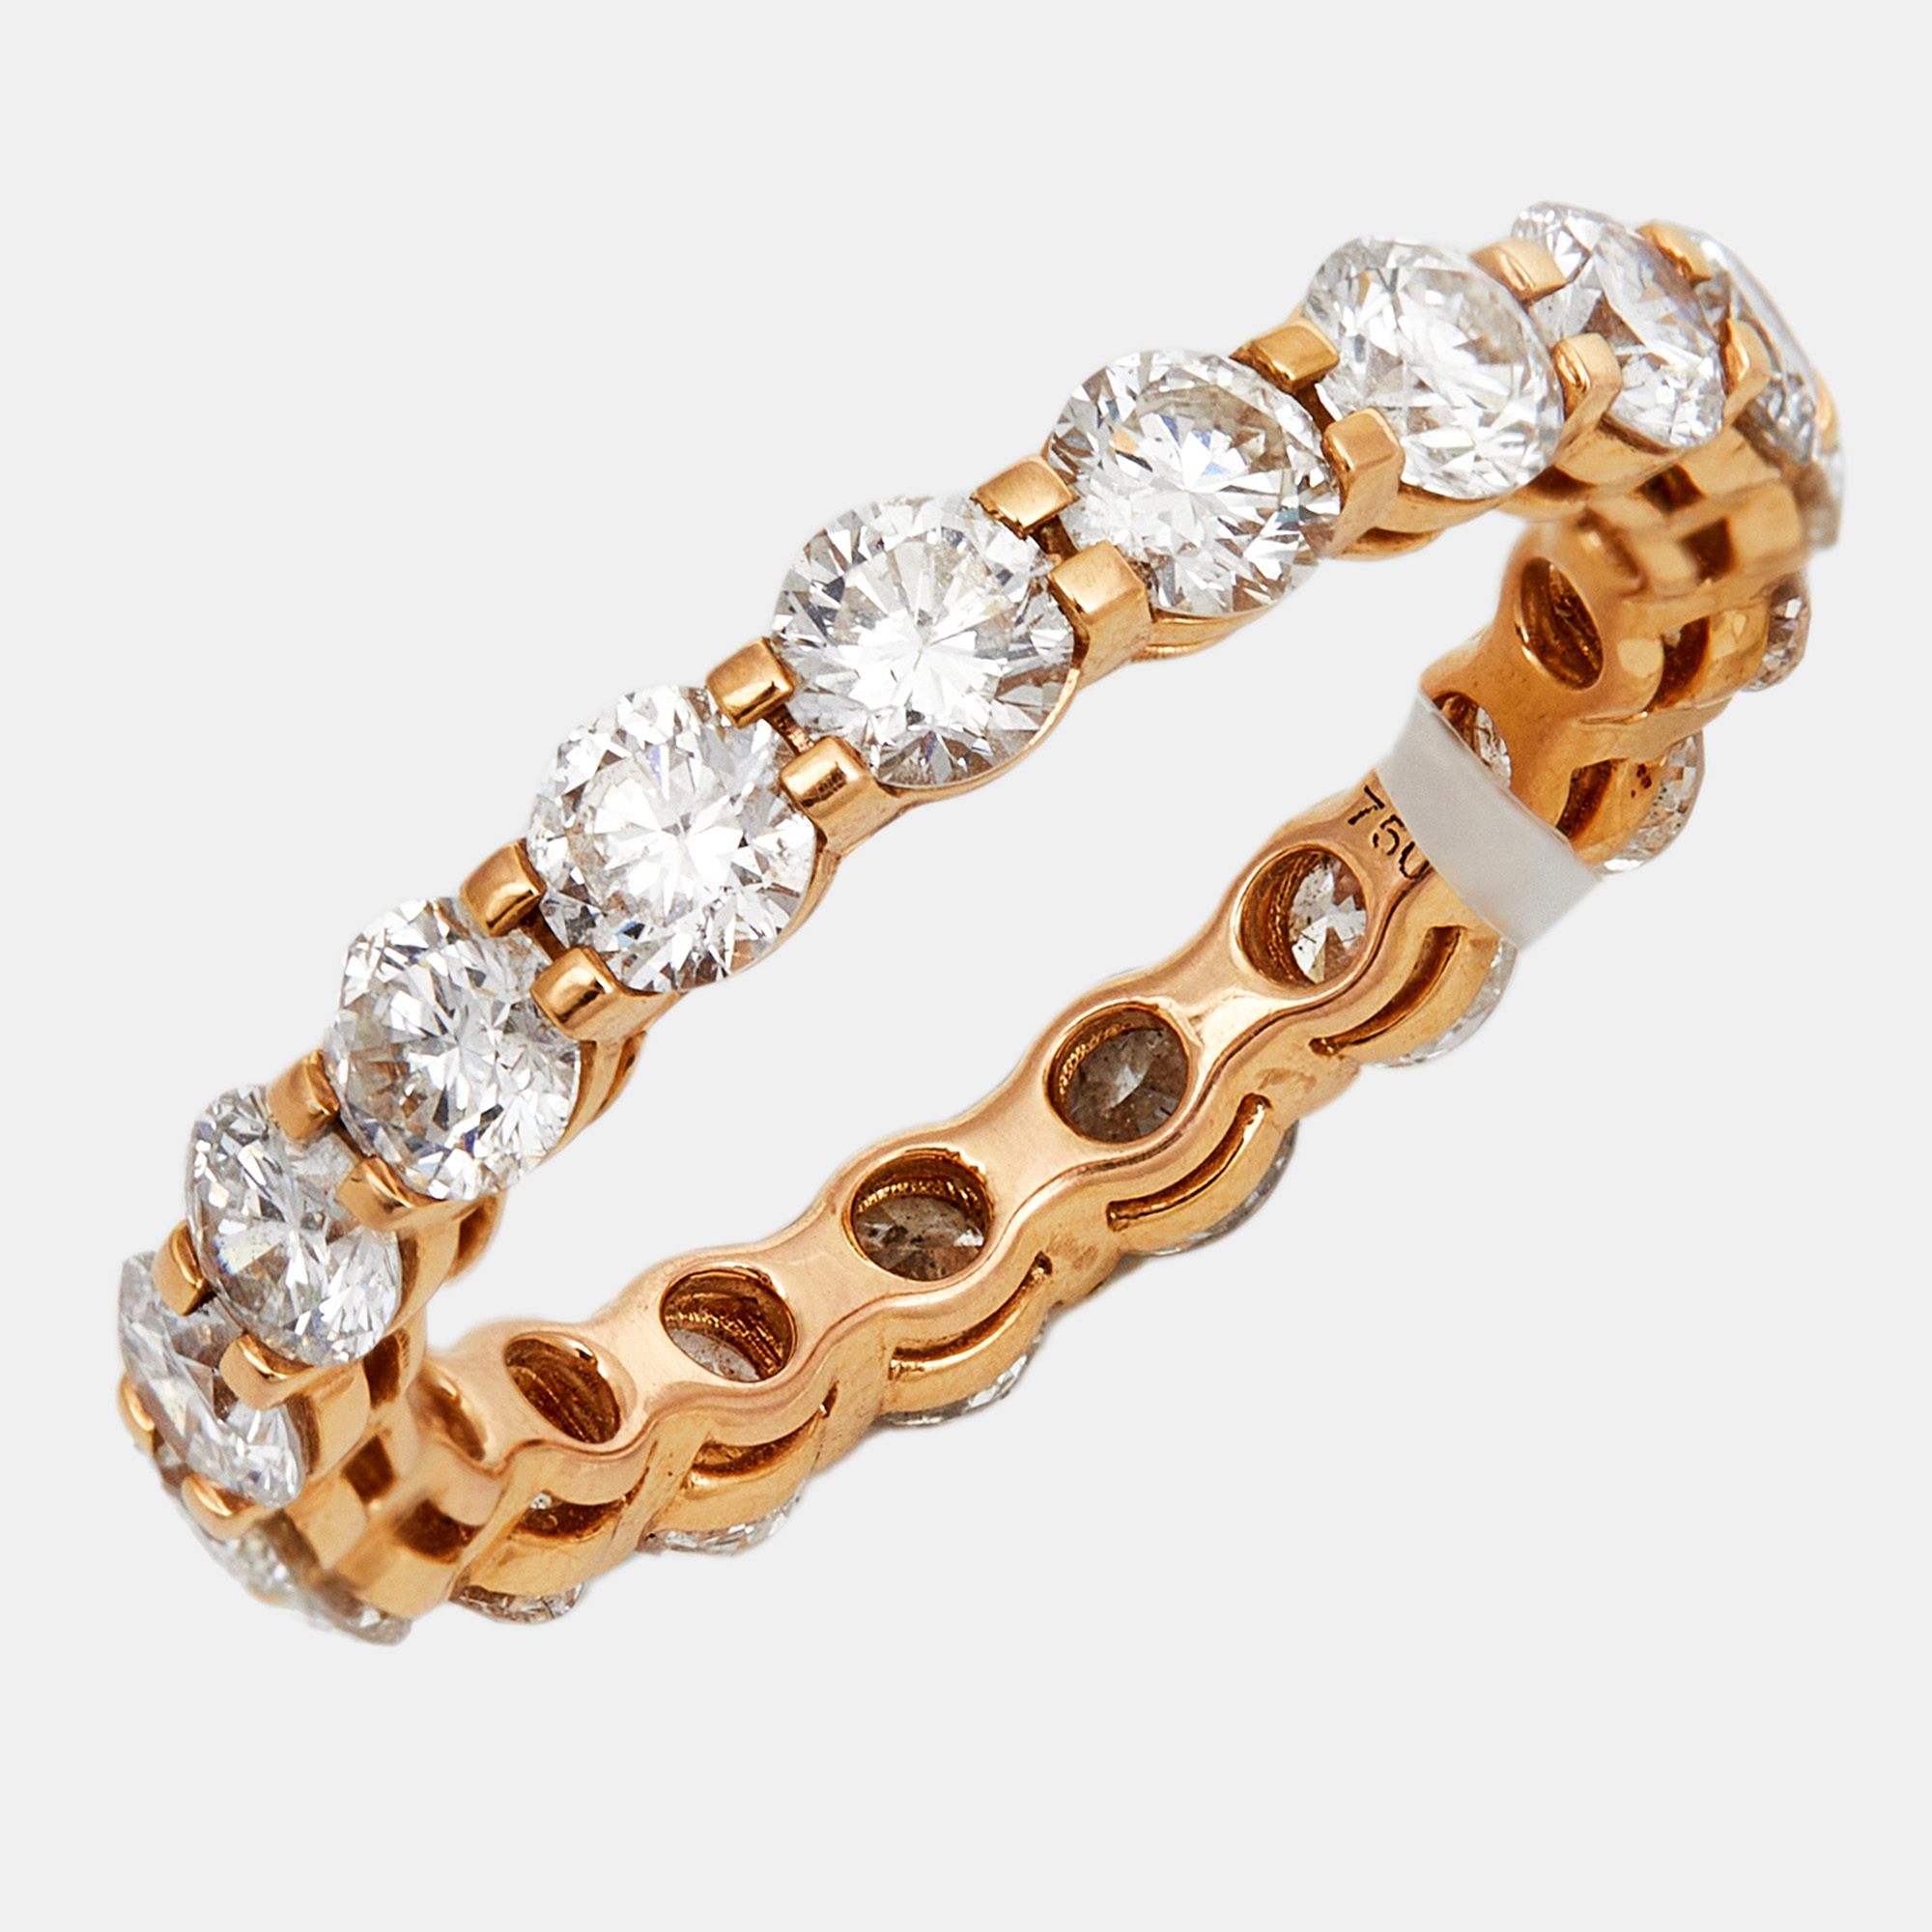 The diamond edit 18k rose gold ring